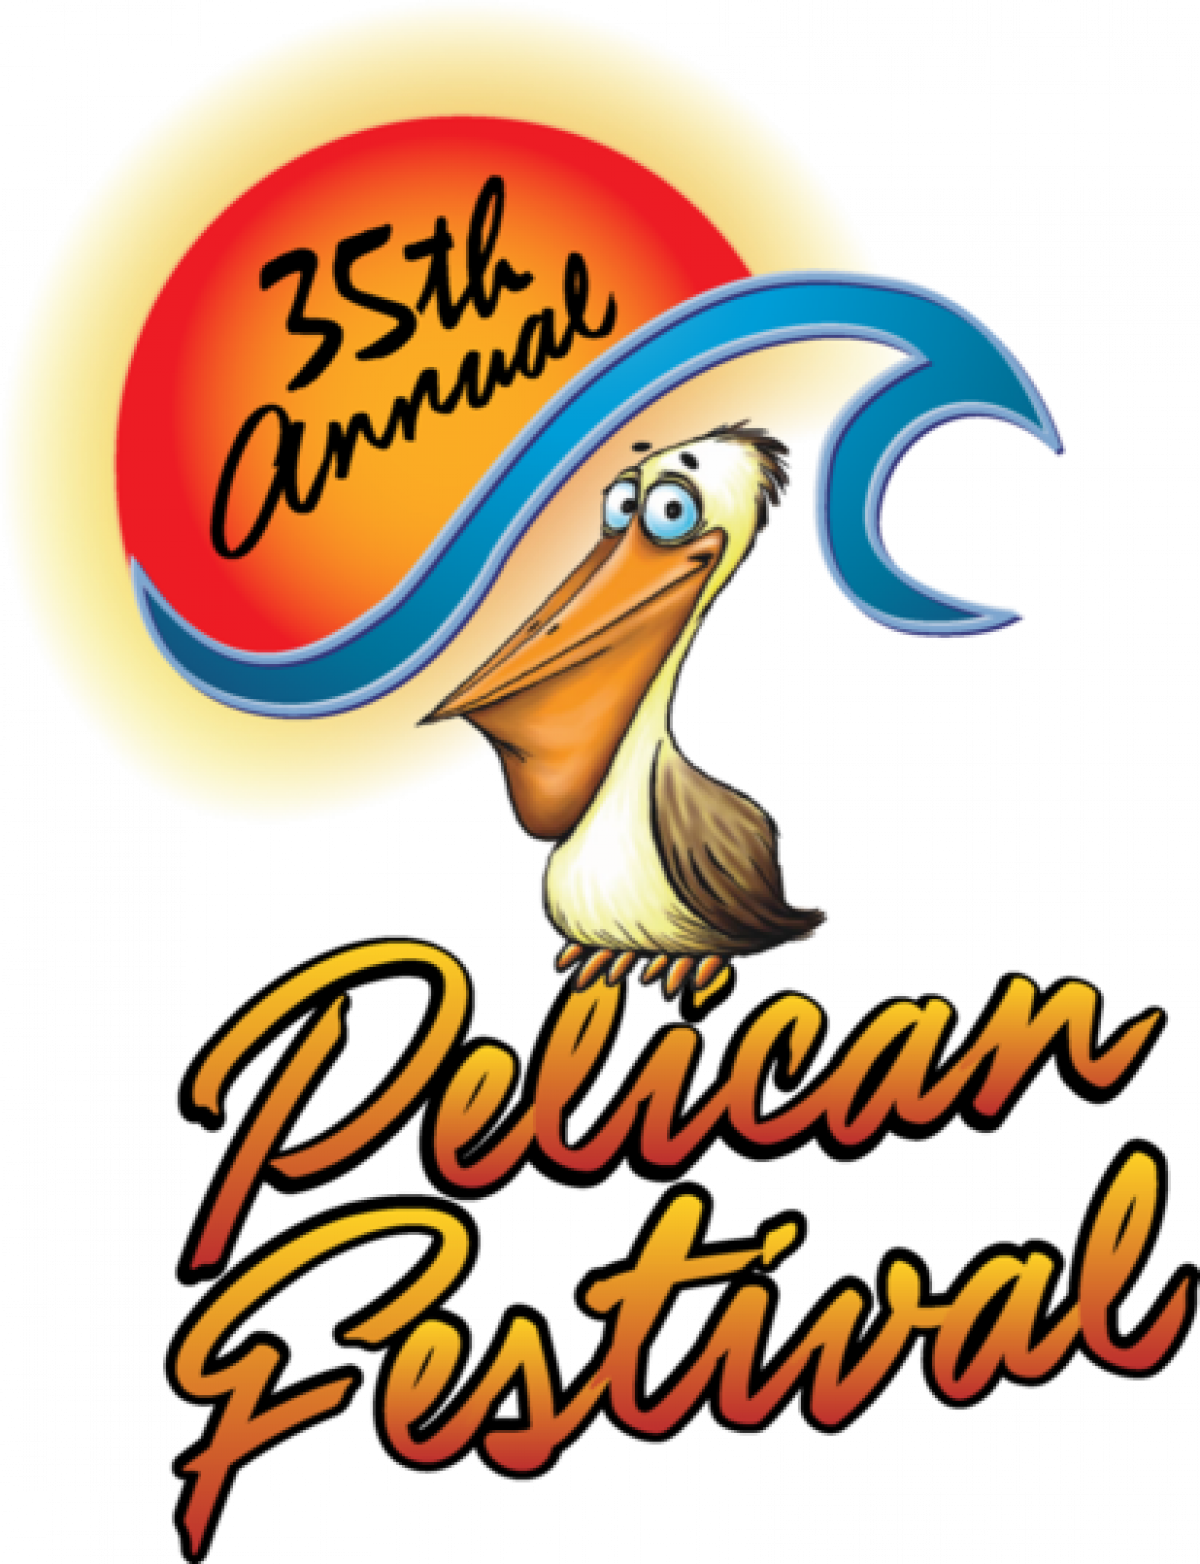 oklahoma, grove, grand lake association, pelican festival